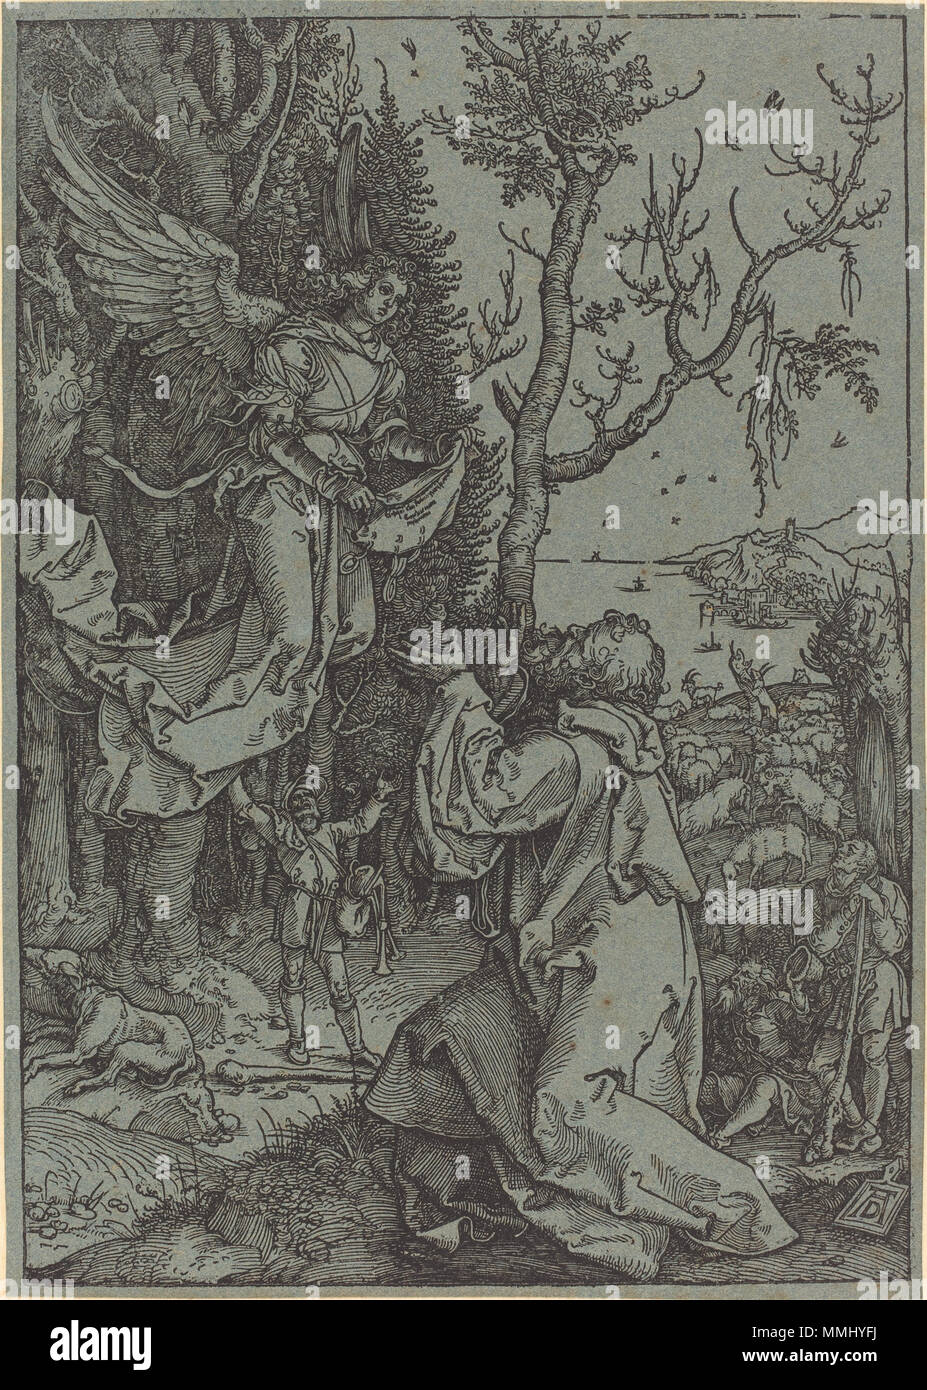 R-20101130-0036.jpg Albrecht Dürer (German, 1471 - 1528 ), Joachim and the Angel, c. 1504, woodcut on blue laid paper; laid down, Ailsa Mellon Bruce Fund Albrecht Dürer - Joachim and the Angel (NGA 1988.18.1) Stock Photo